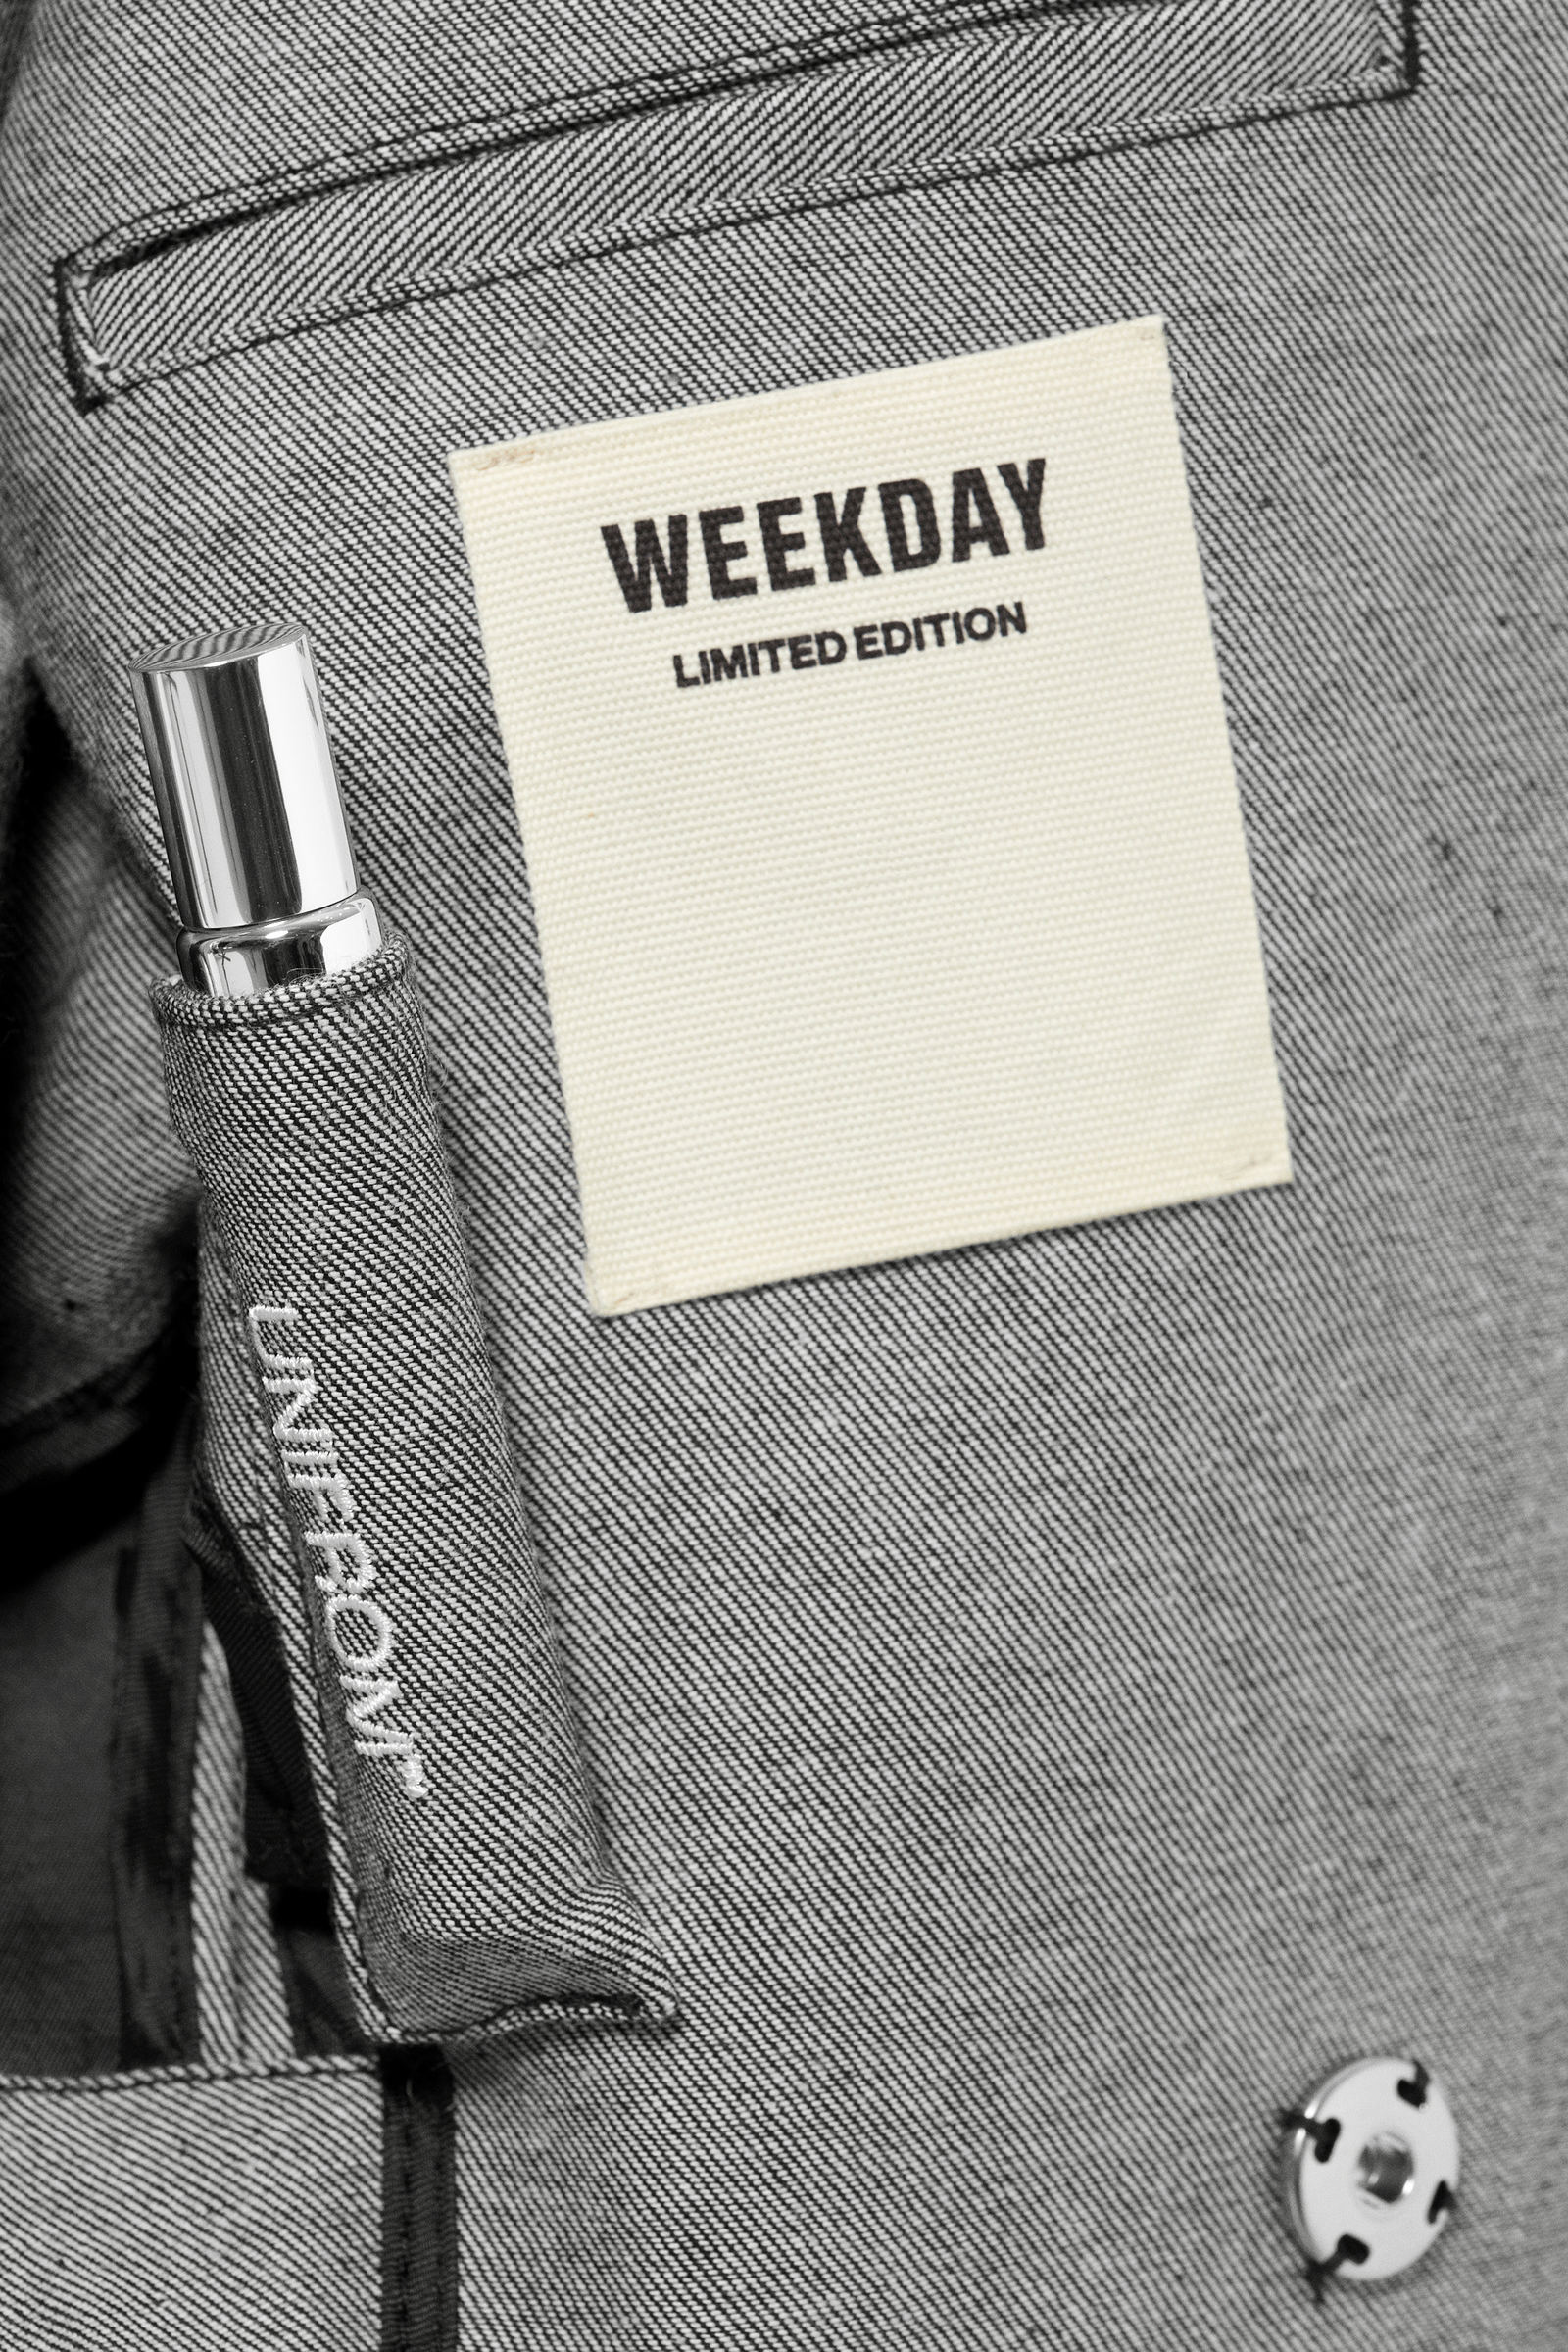 Two-Tone Grey - Unifrom™ + Weekday Limited Edition Power Blazer - 12